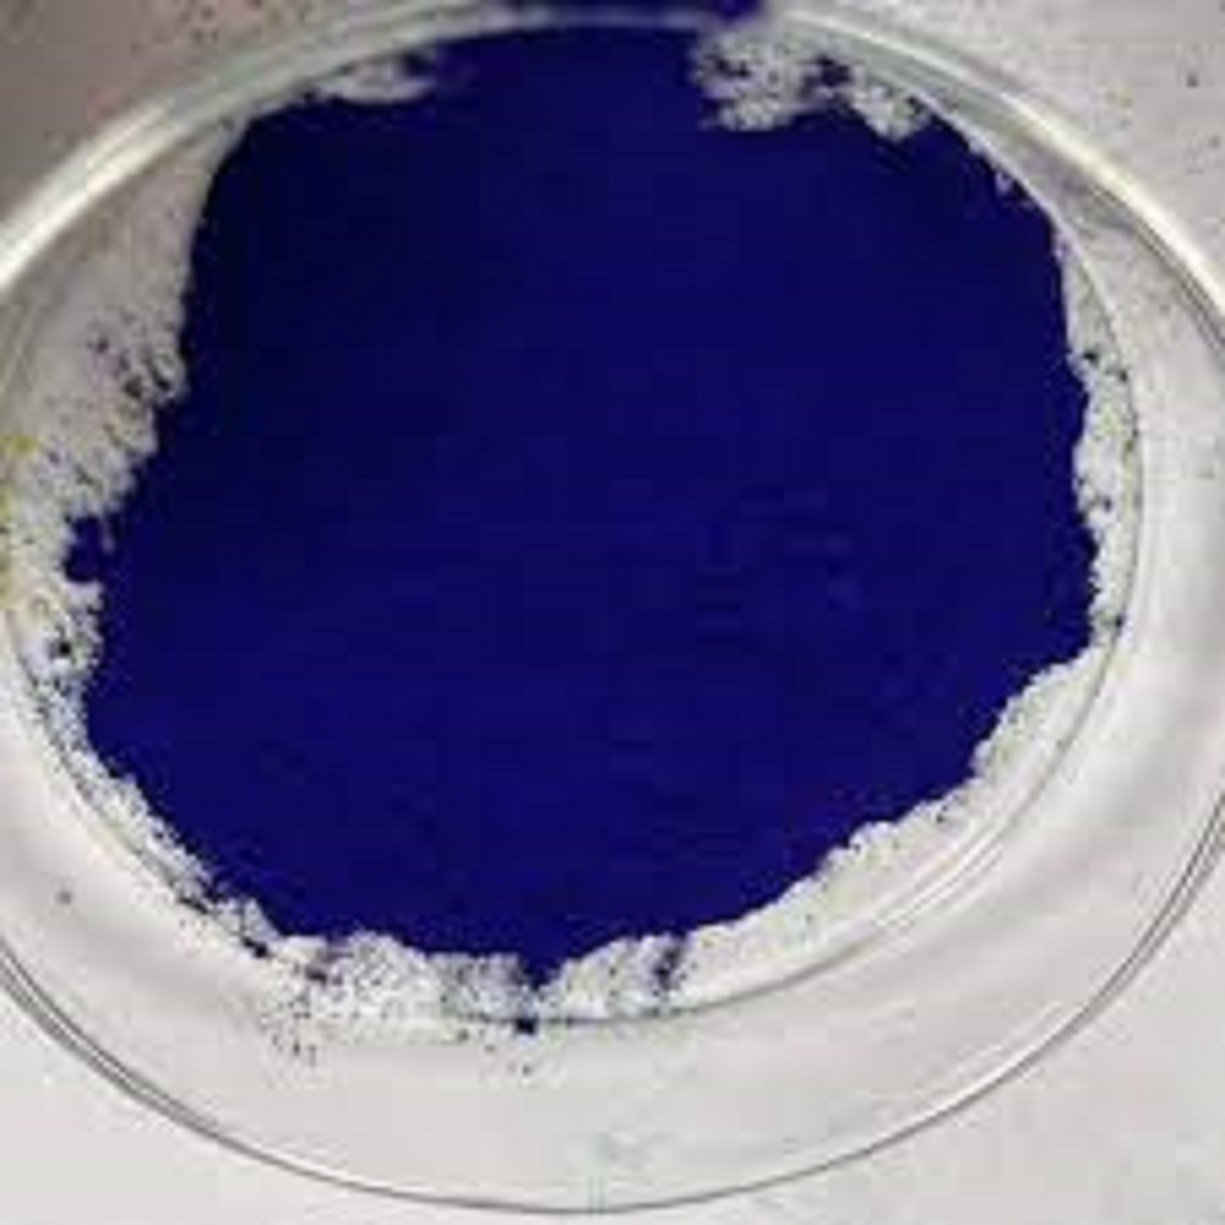 Organic Pigment Blue 15:2